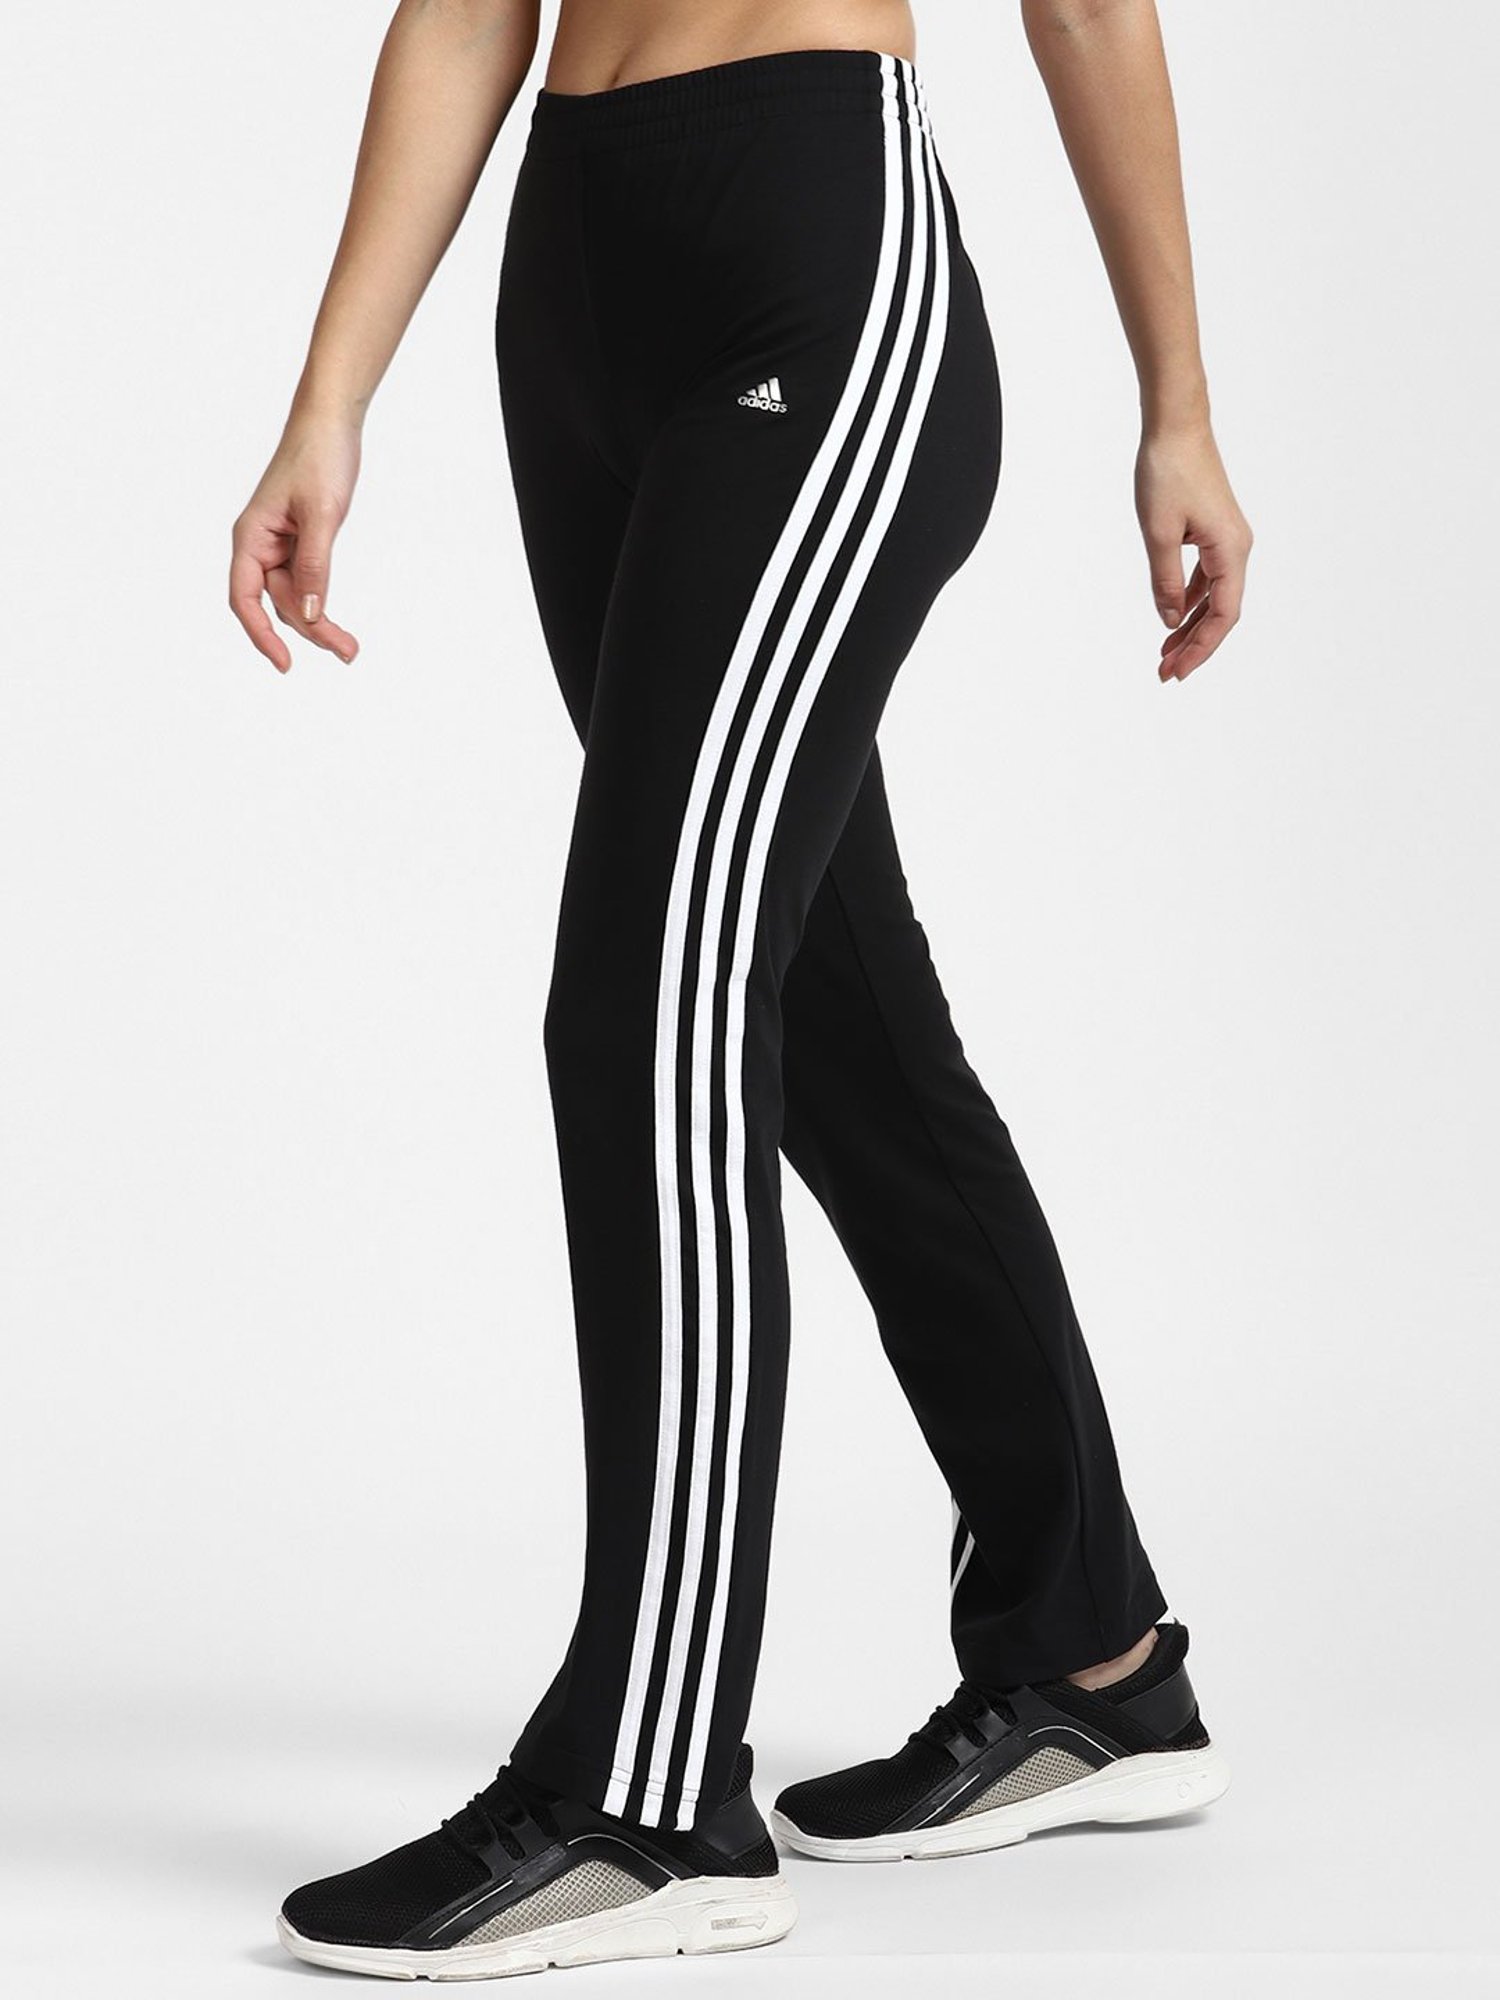 Buy Adidas Womens Comfortable Fitted Yoga Pants GM5224BlackWhiteLarge   BlackWhite  L at Amazonin